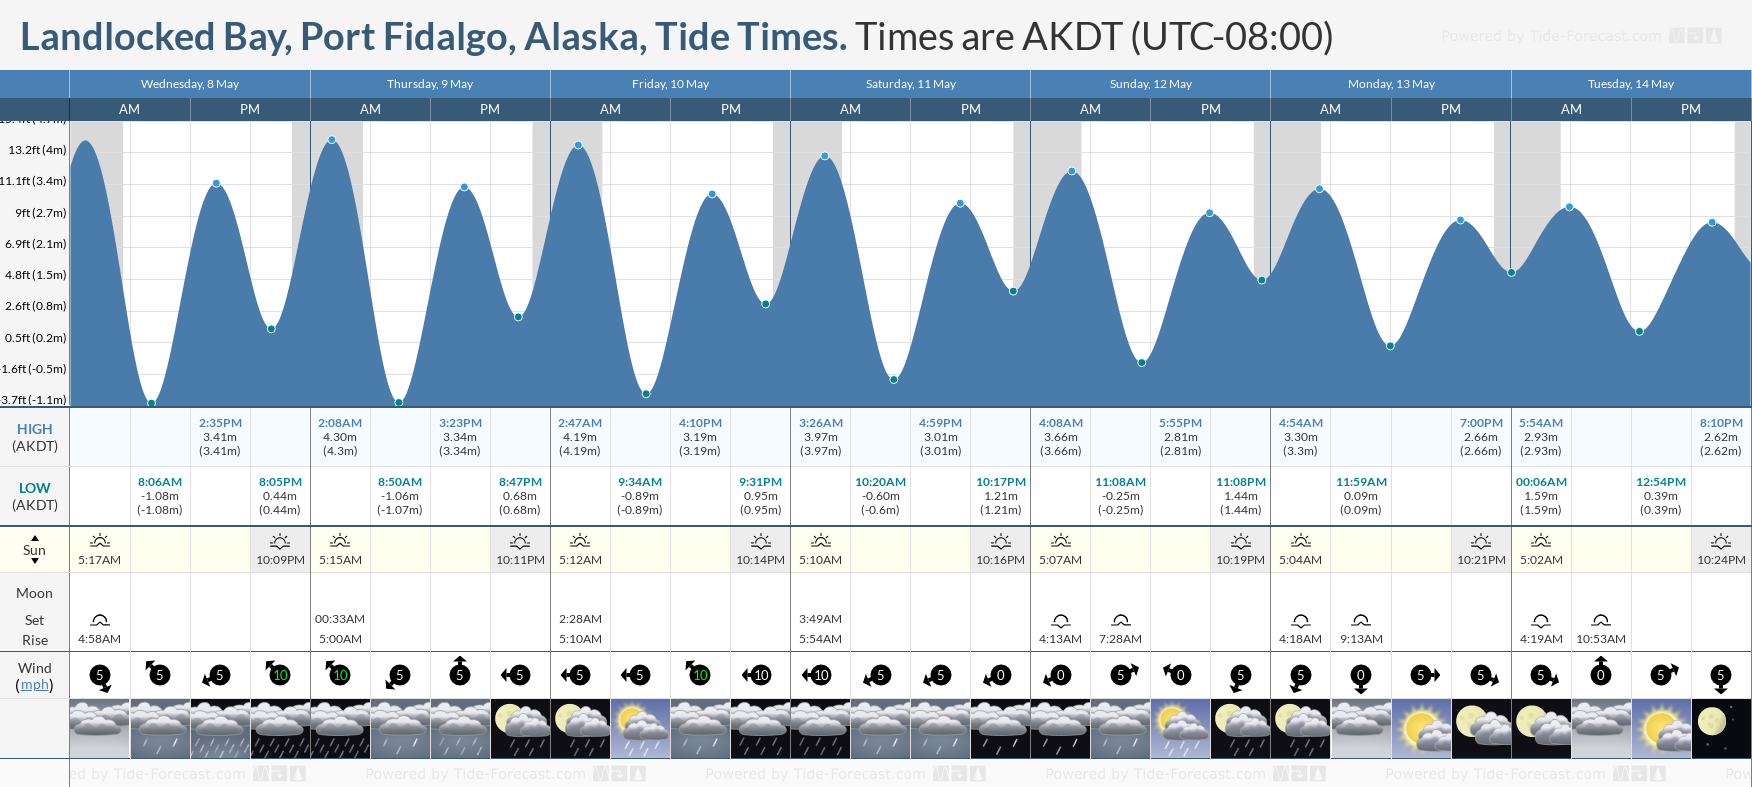 Landlocked Bay, Port Fidalgo, Alaska Tide Chart including high and low tide tide times for the next 7 days